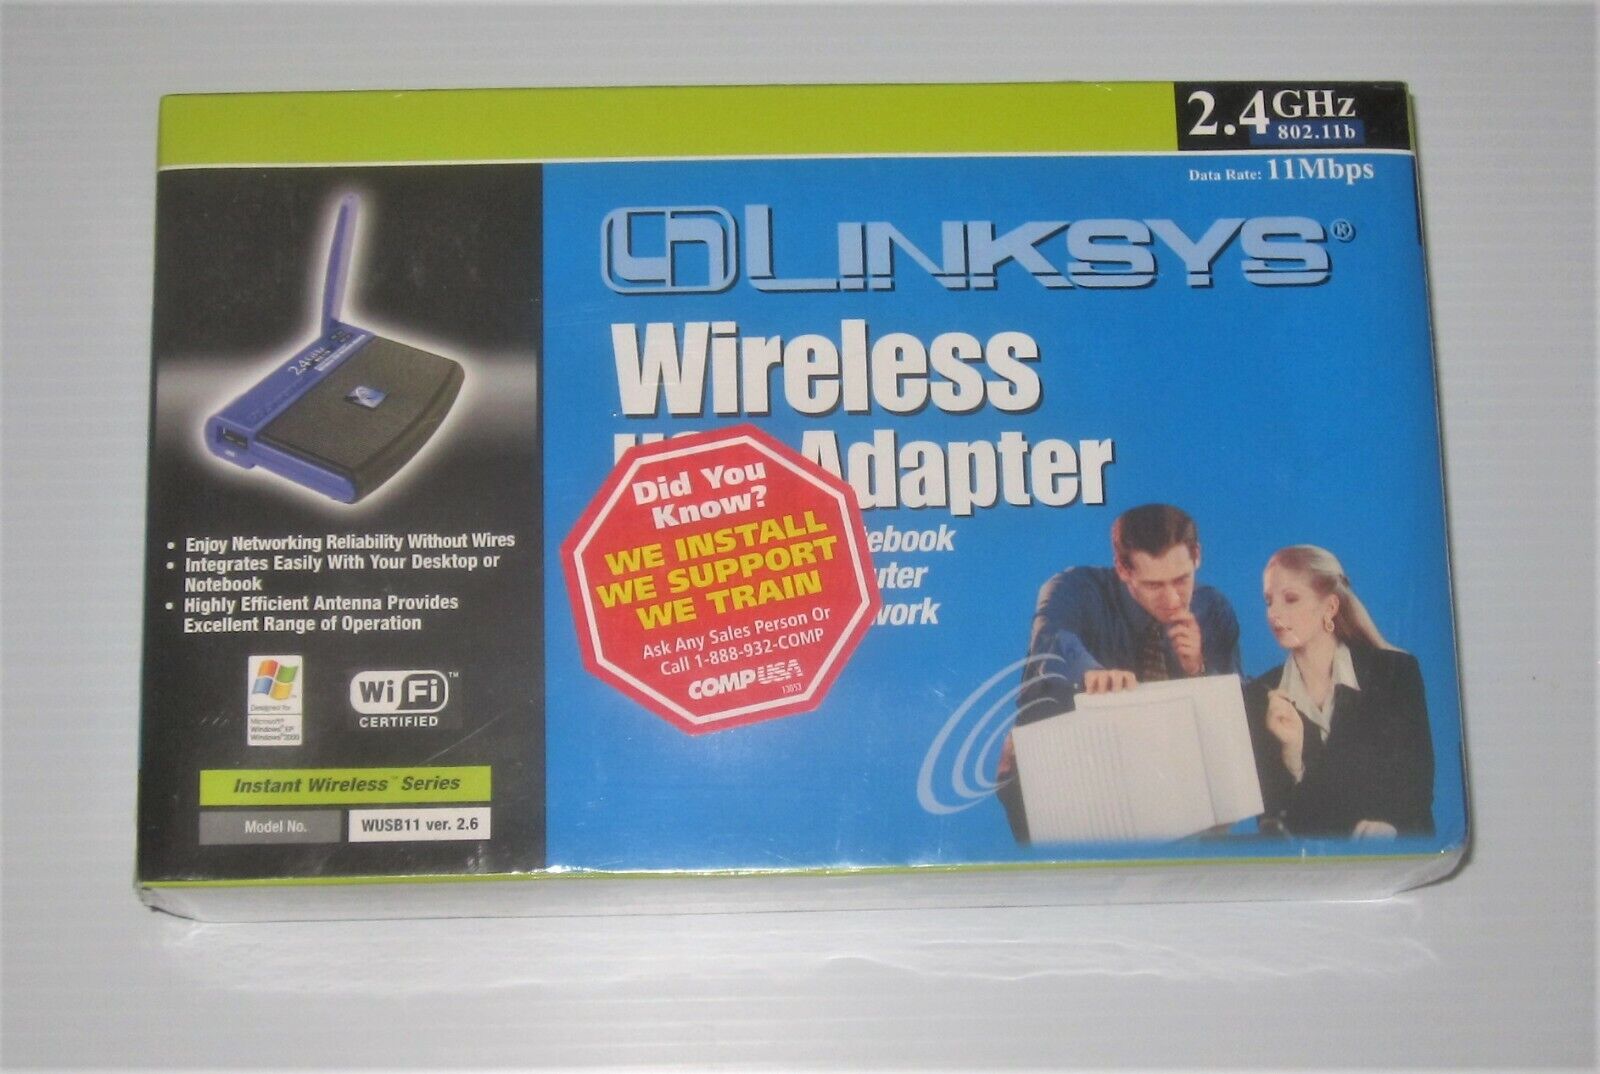 Linksys Wireless USB Adapter Model No. WUSB11 ver.2.6 - NEW